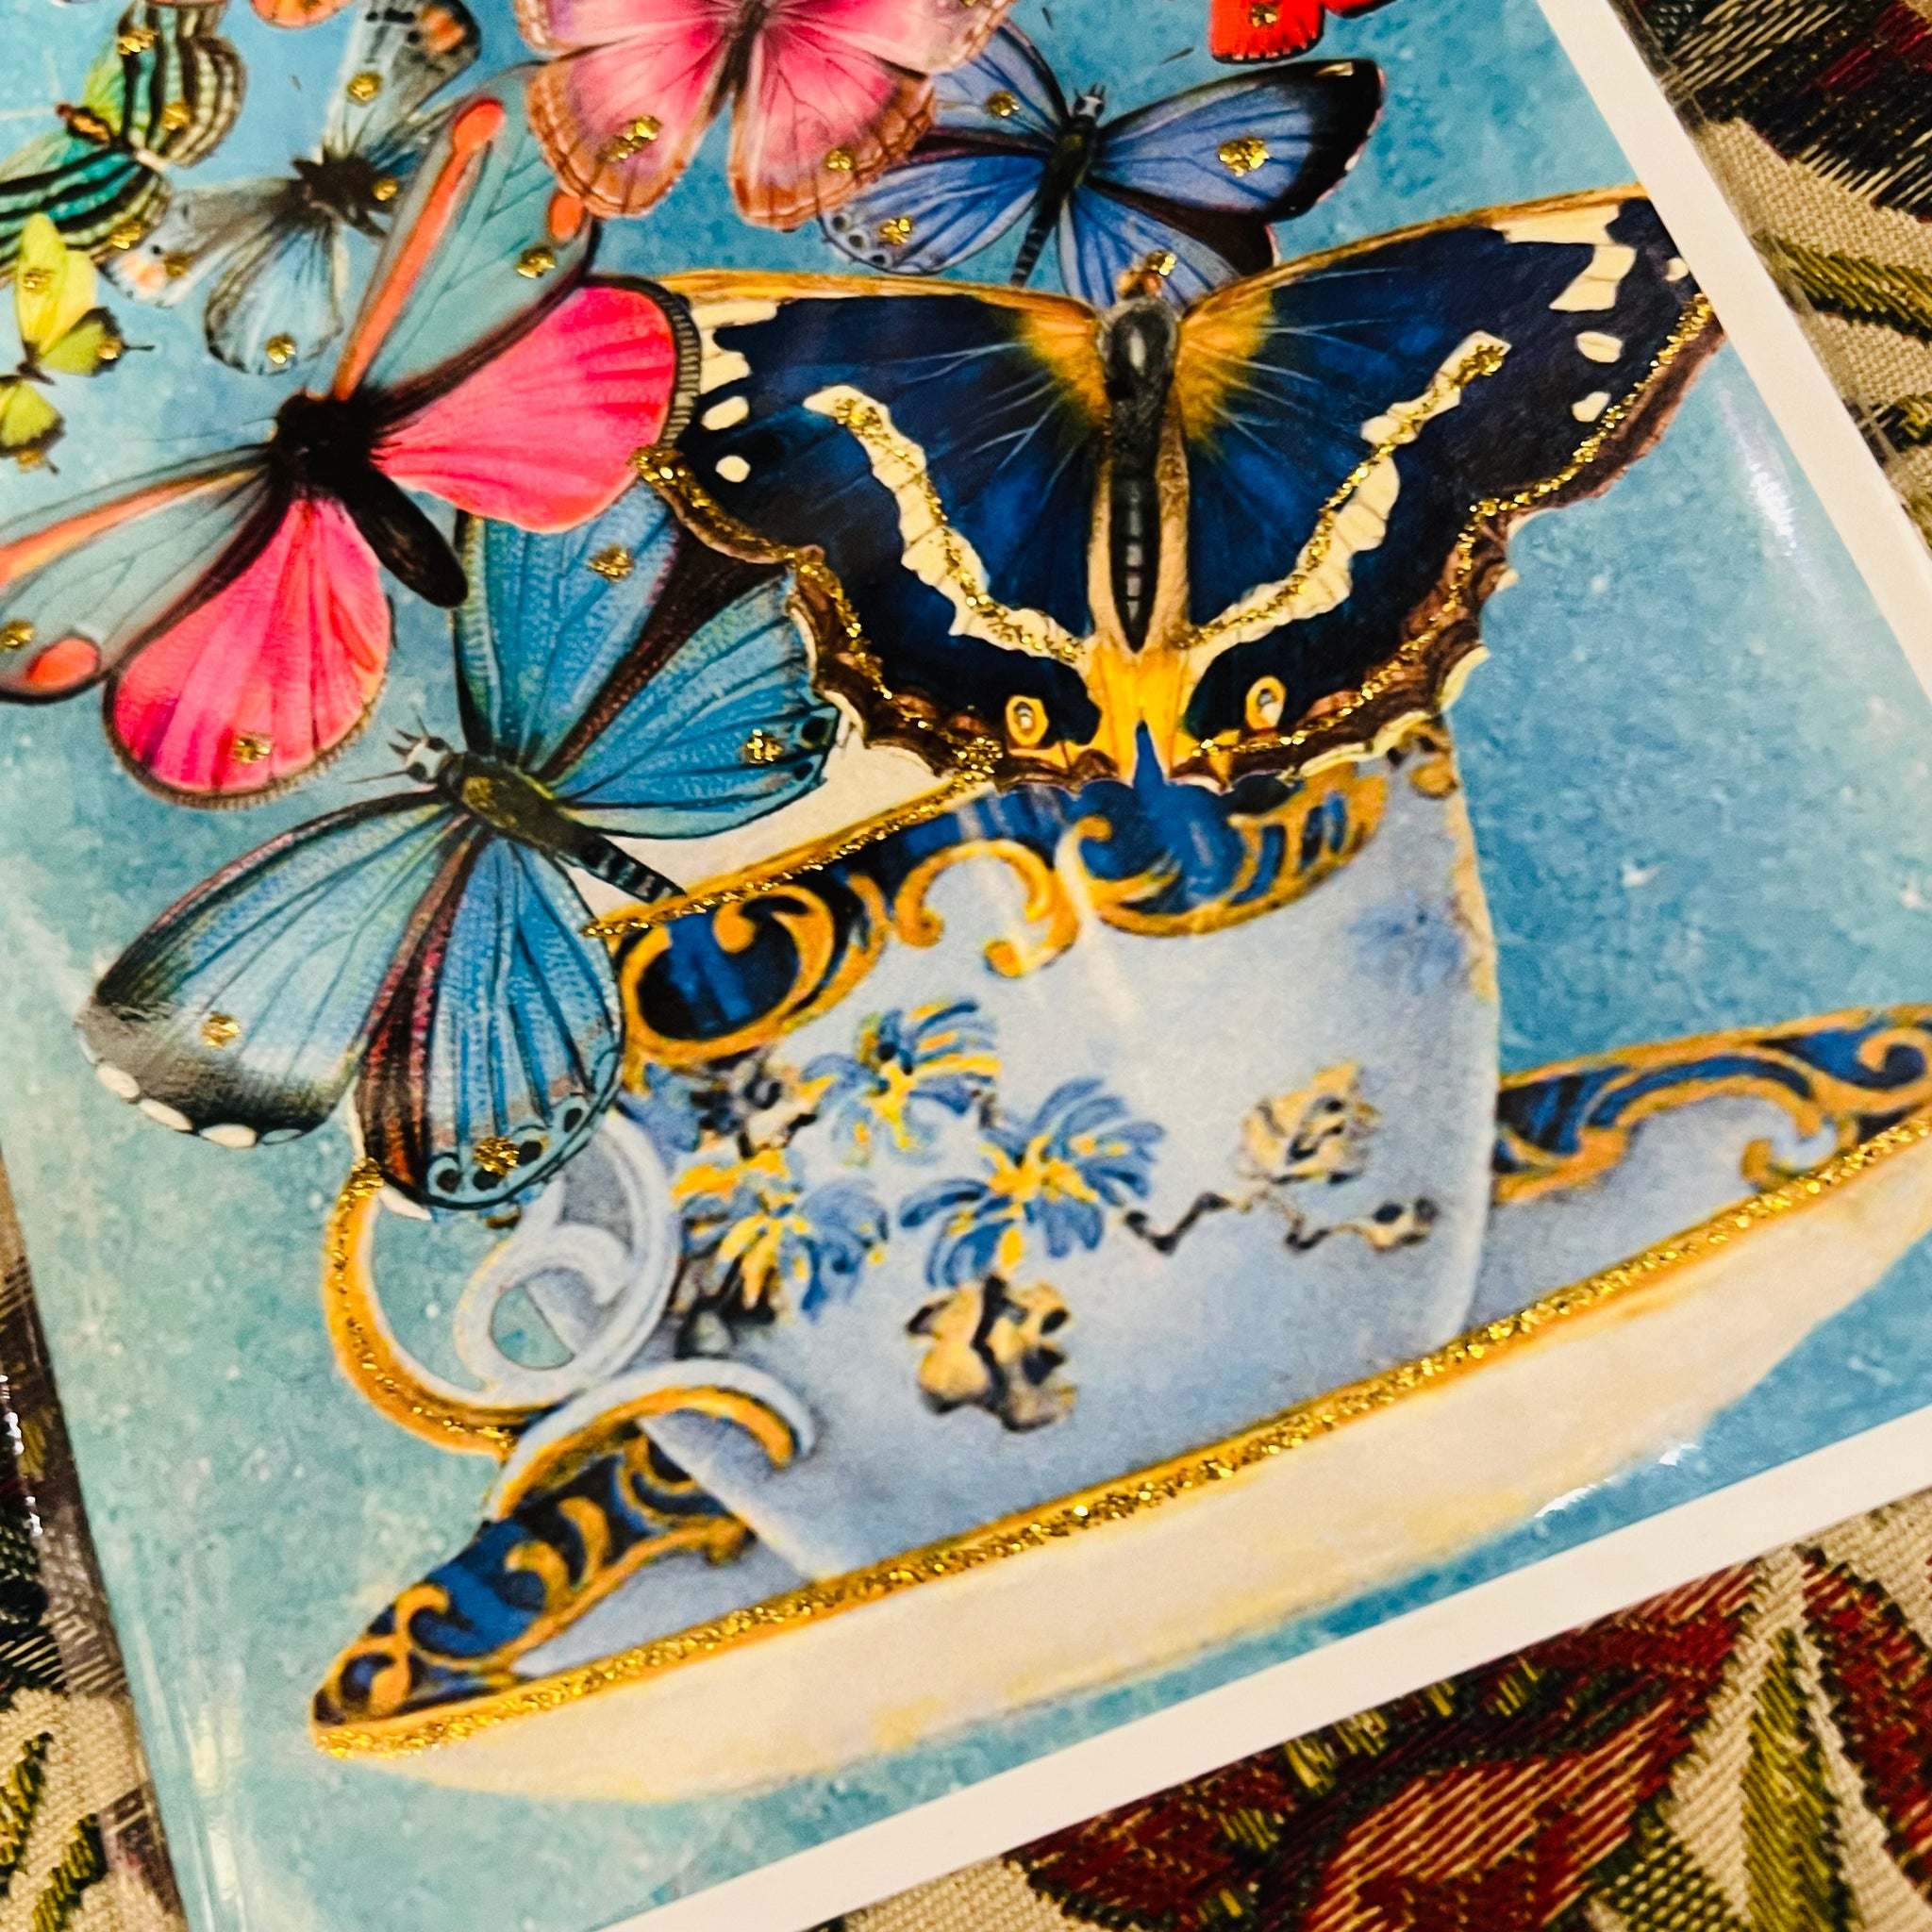 Glitter Card - Butterfly Parade